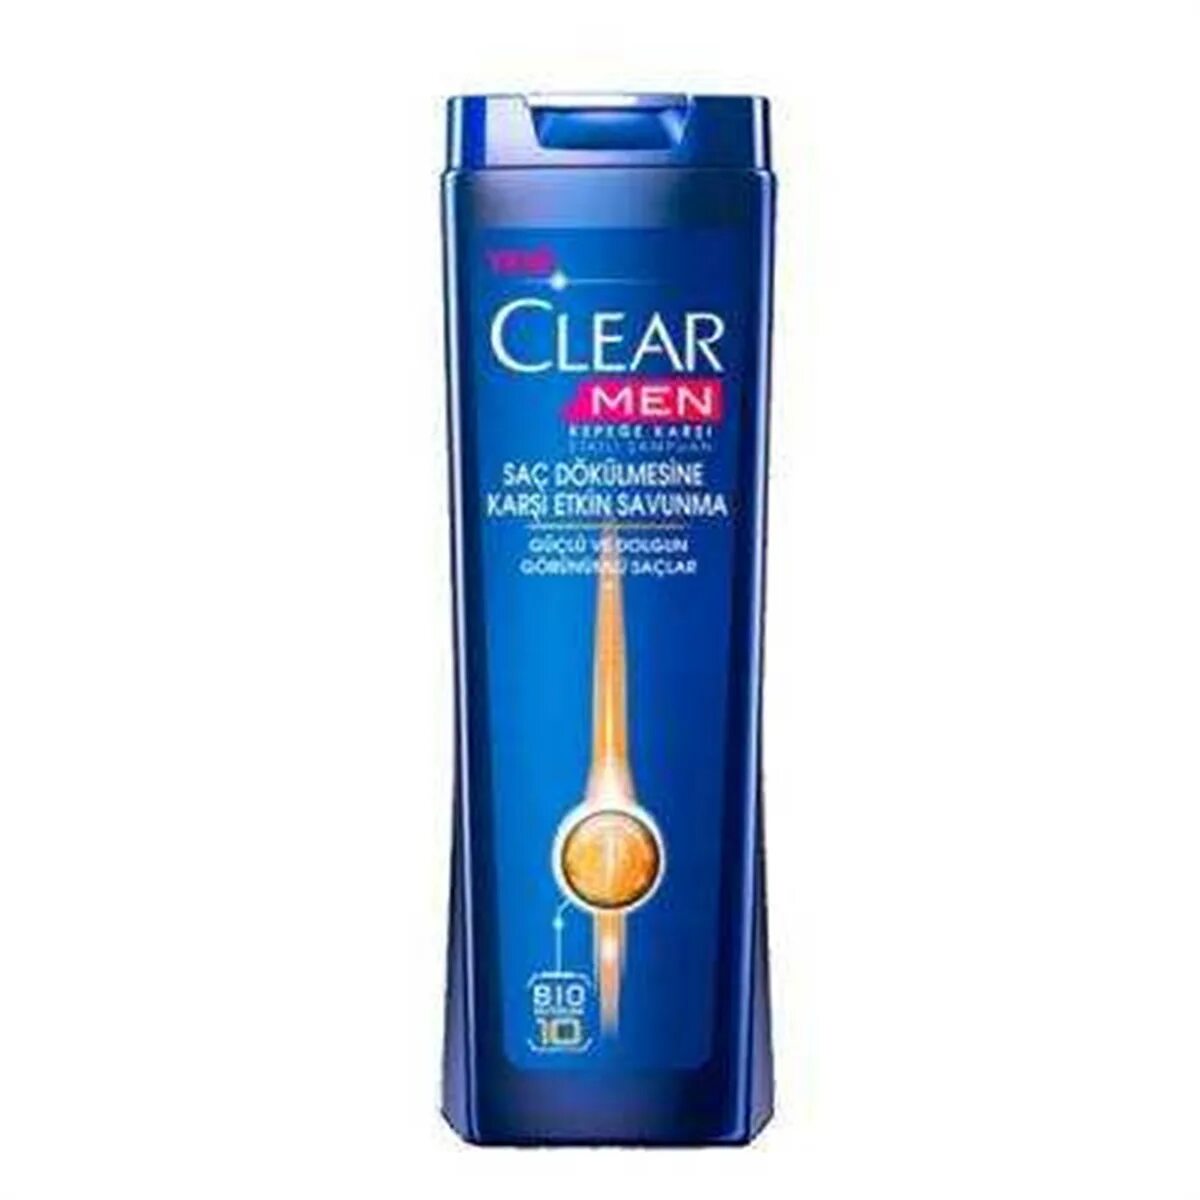 Clear men 610 мл. Clear men жидкая гелевая формула 380 мл. Clear men Sampuan. Шампунь Clear men cool Sport.